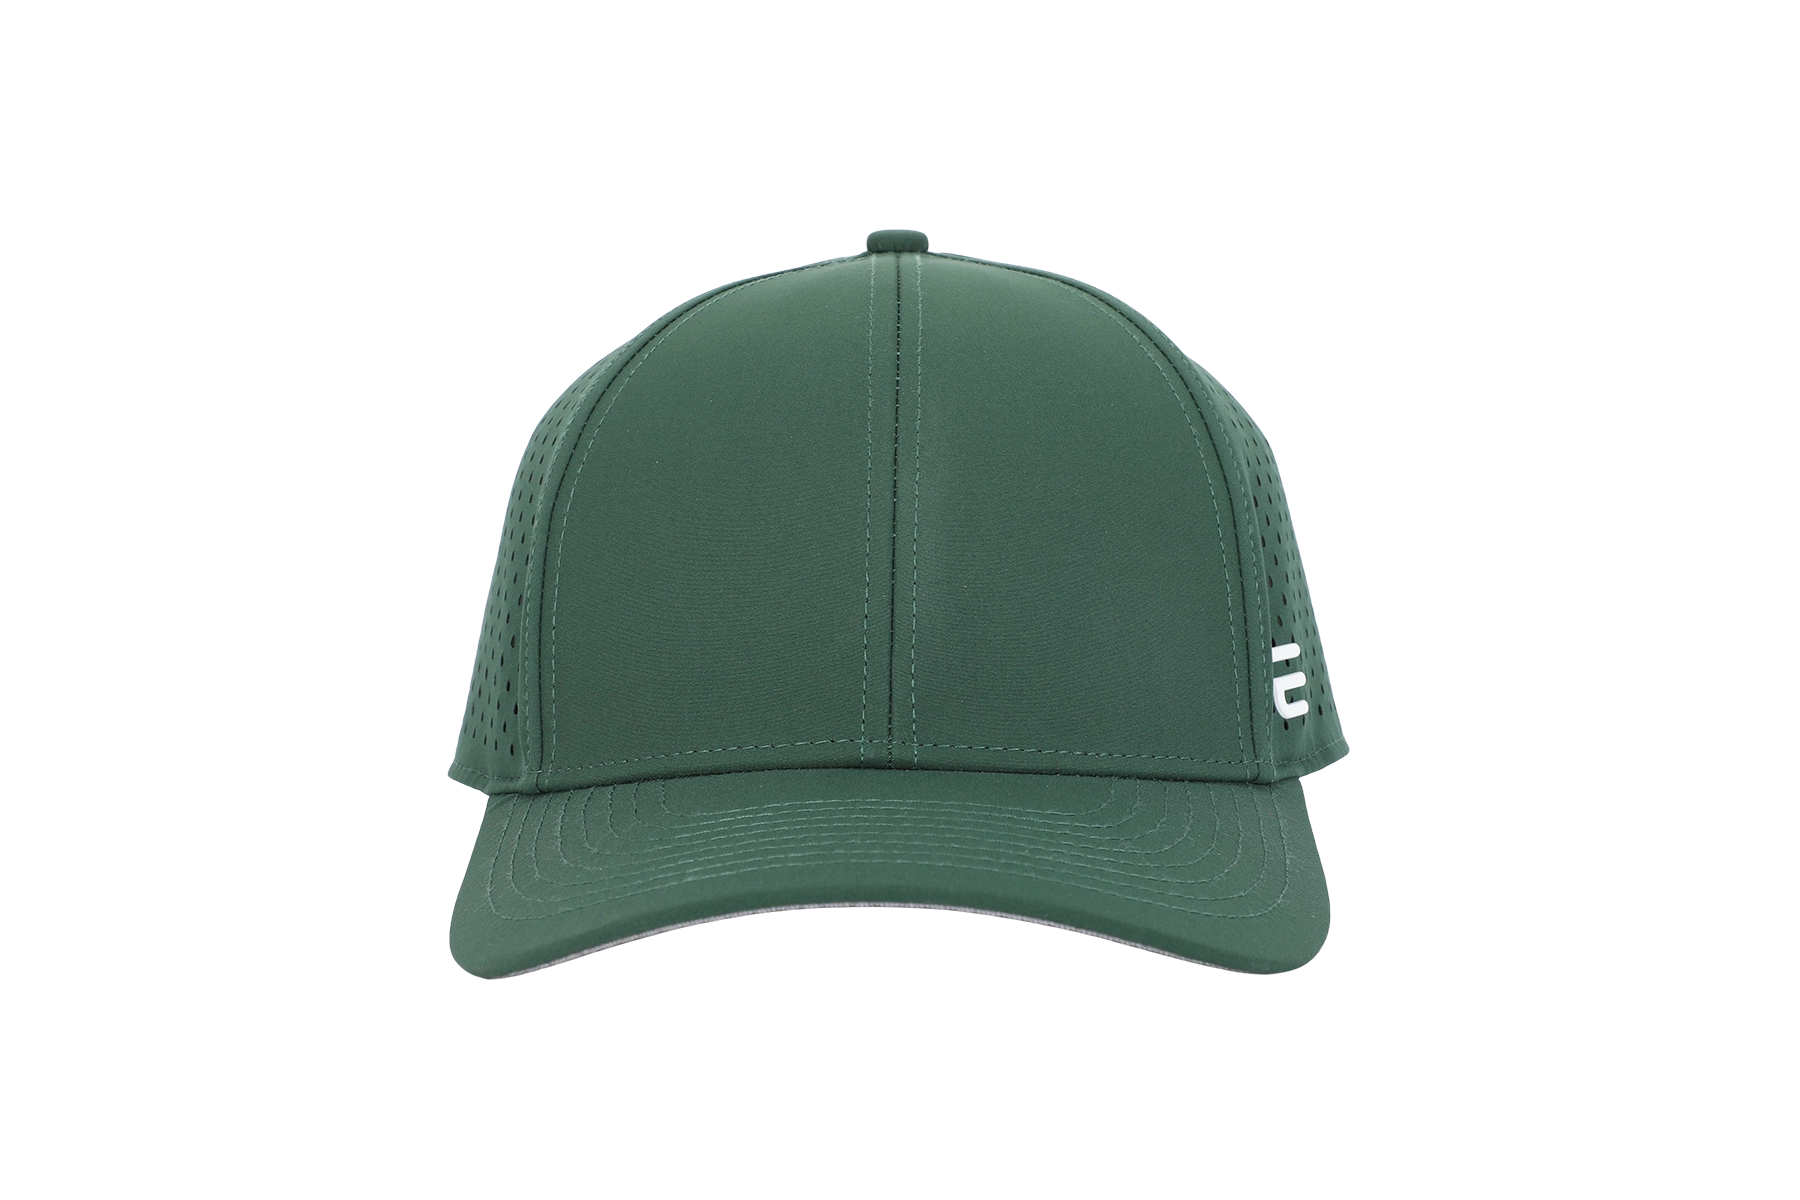 Premium Baseball Cap Caps gratis Lieferung inkl Emperor 